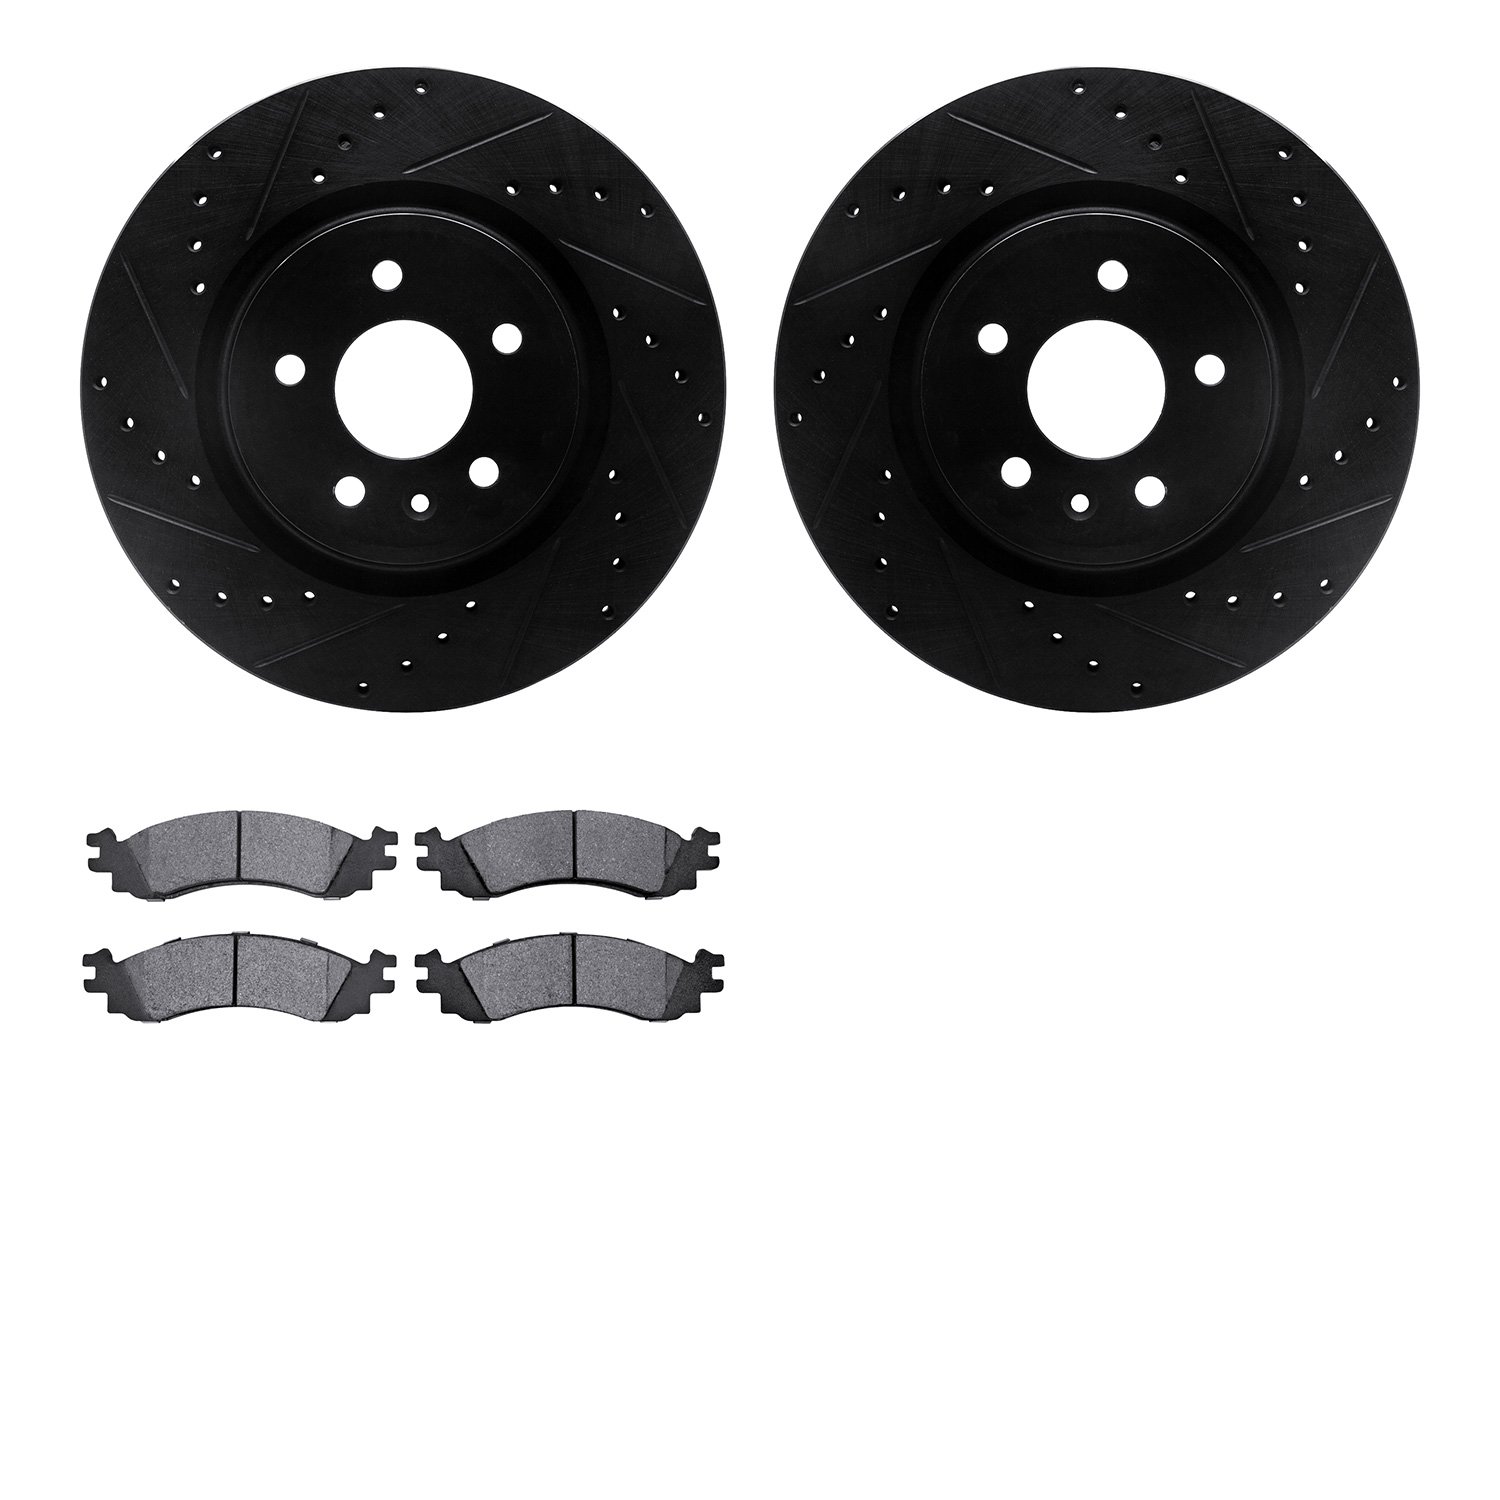 8302-54182 Drilled/Slotted Brake Rotors with 3000-Series Ceramic Brake Pads Kit [Black], 2010-2010 Ford/Lincoln/Mercury/Mazda, P